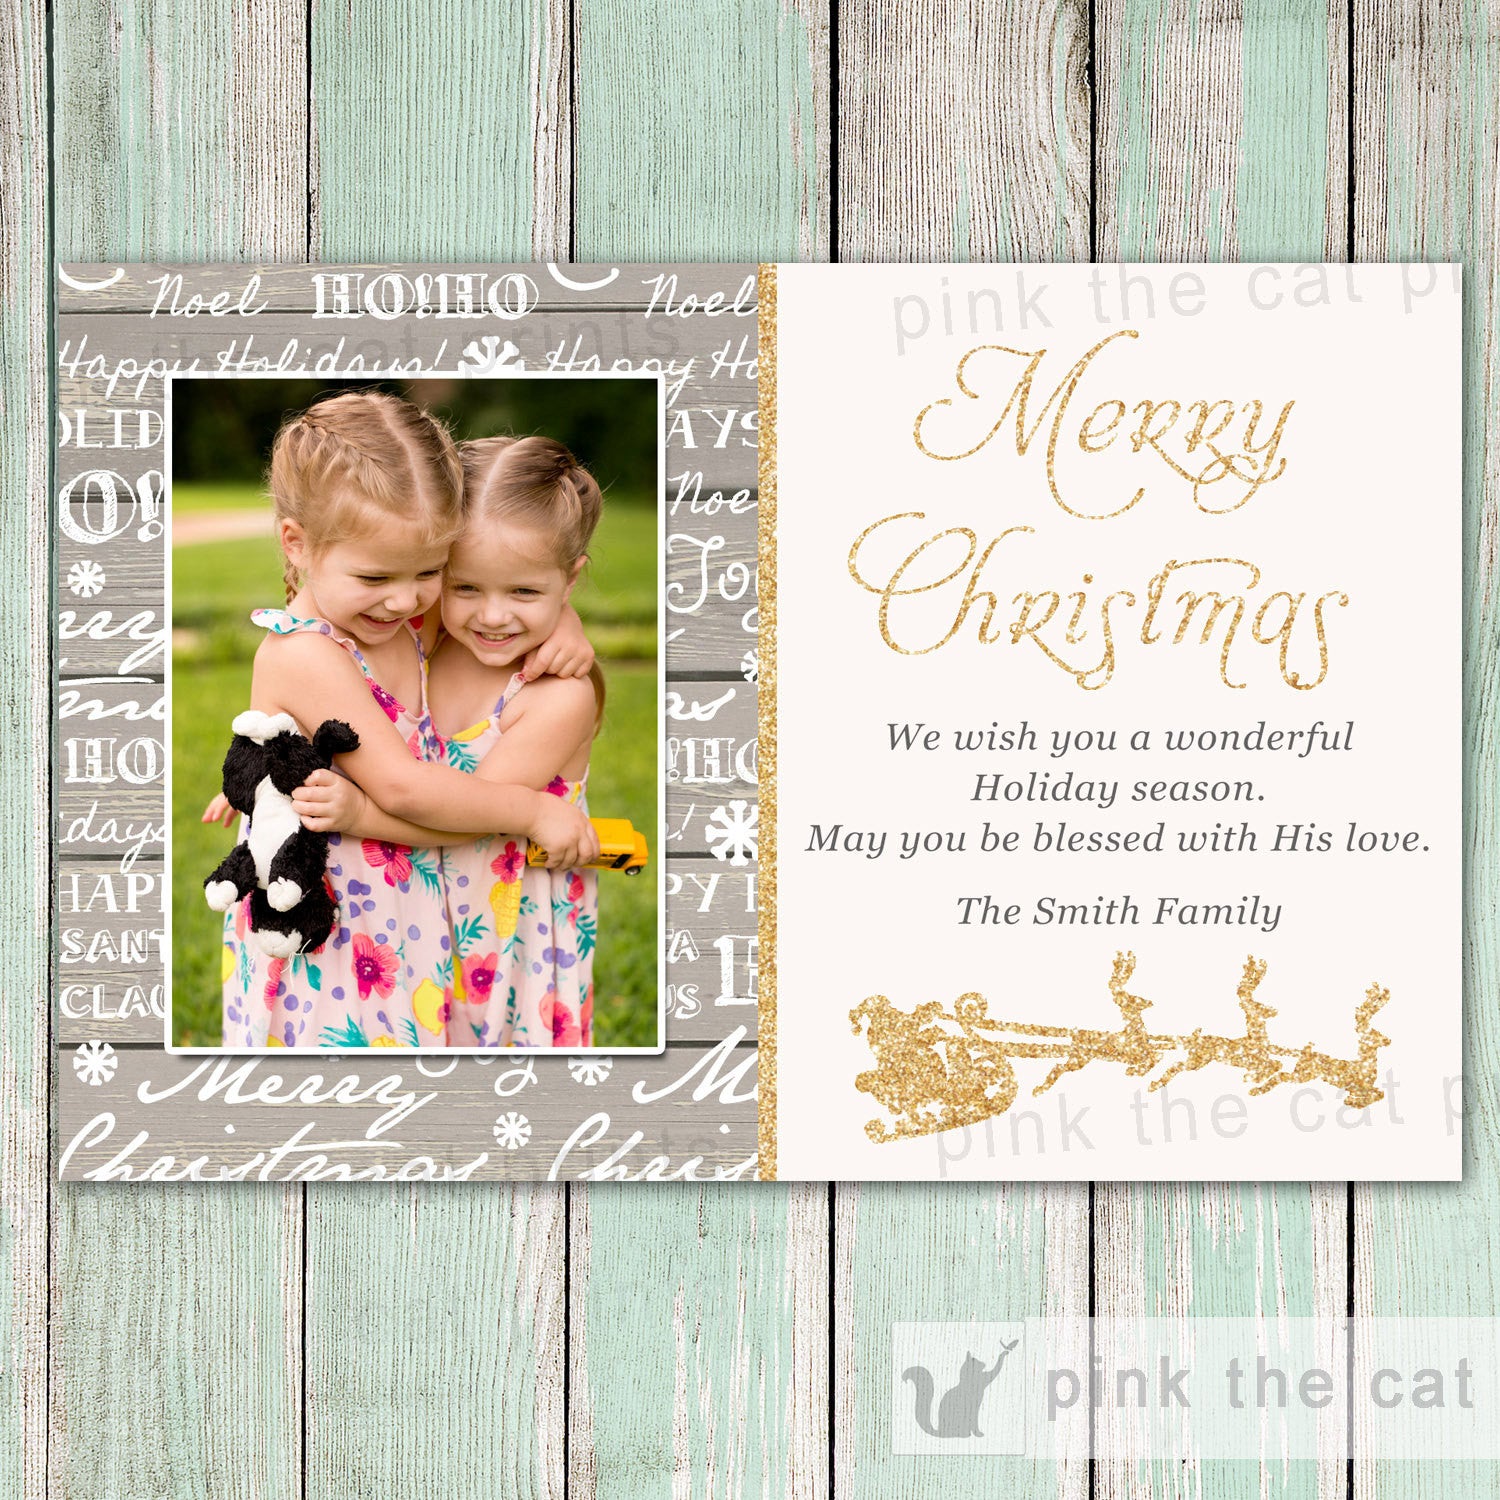 Rustic Christmas Photo Card - Family Xmas Greeting Card Christmas Card Christmas Greeting Card With Words Wood Gold Glitter Christmas Custom